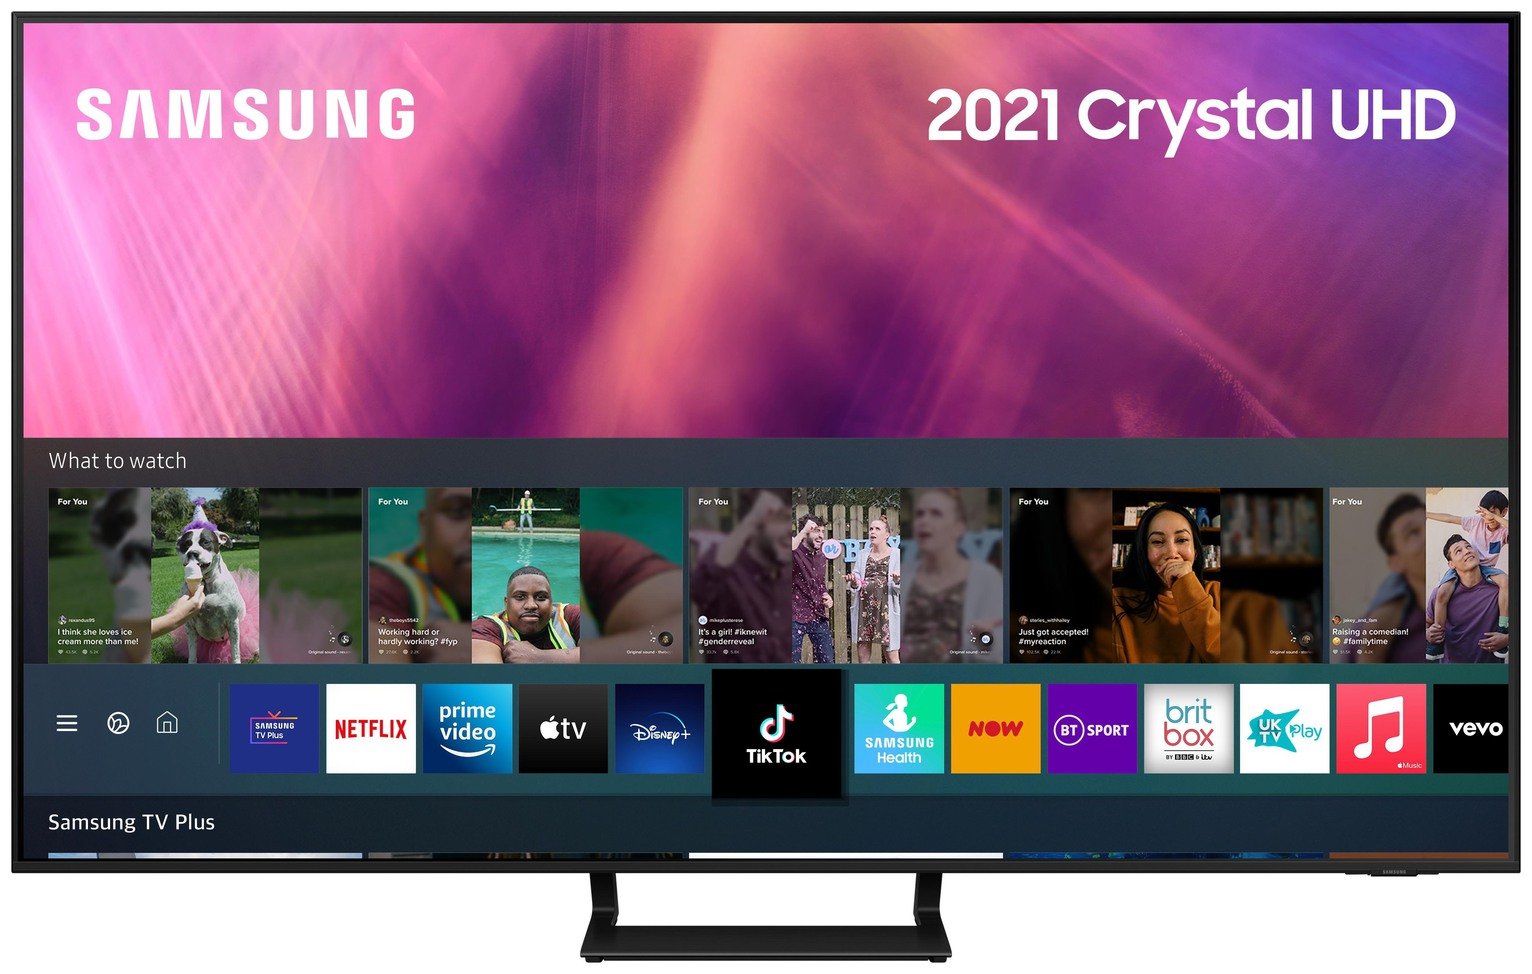 Samsung 75 Inch UE75AU9000 Smart 4K Crystal UHD HDR TV